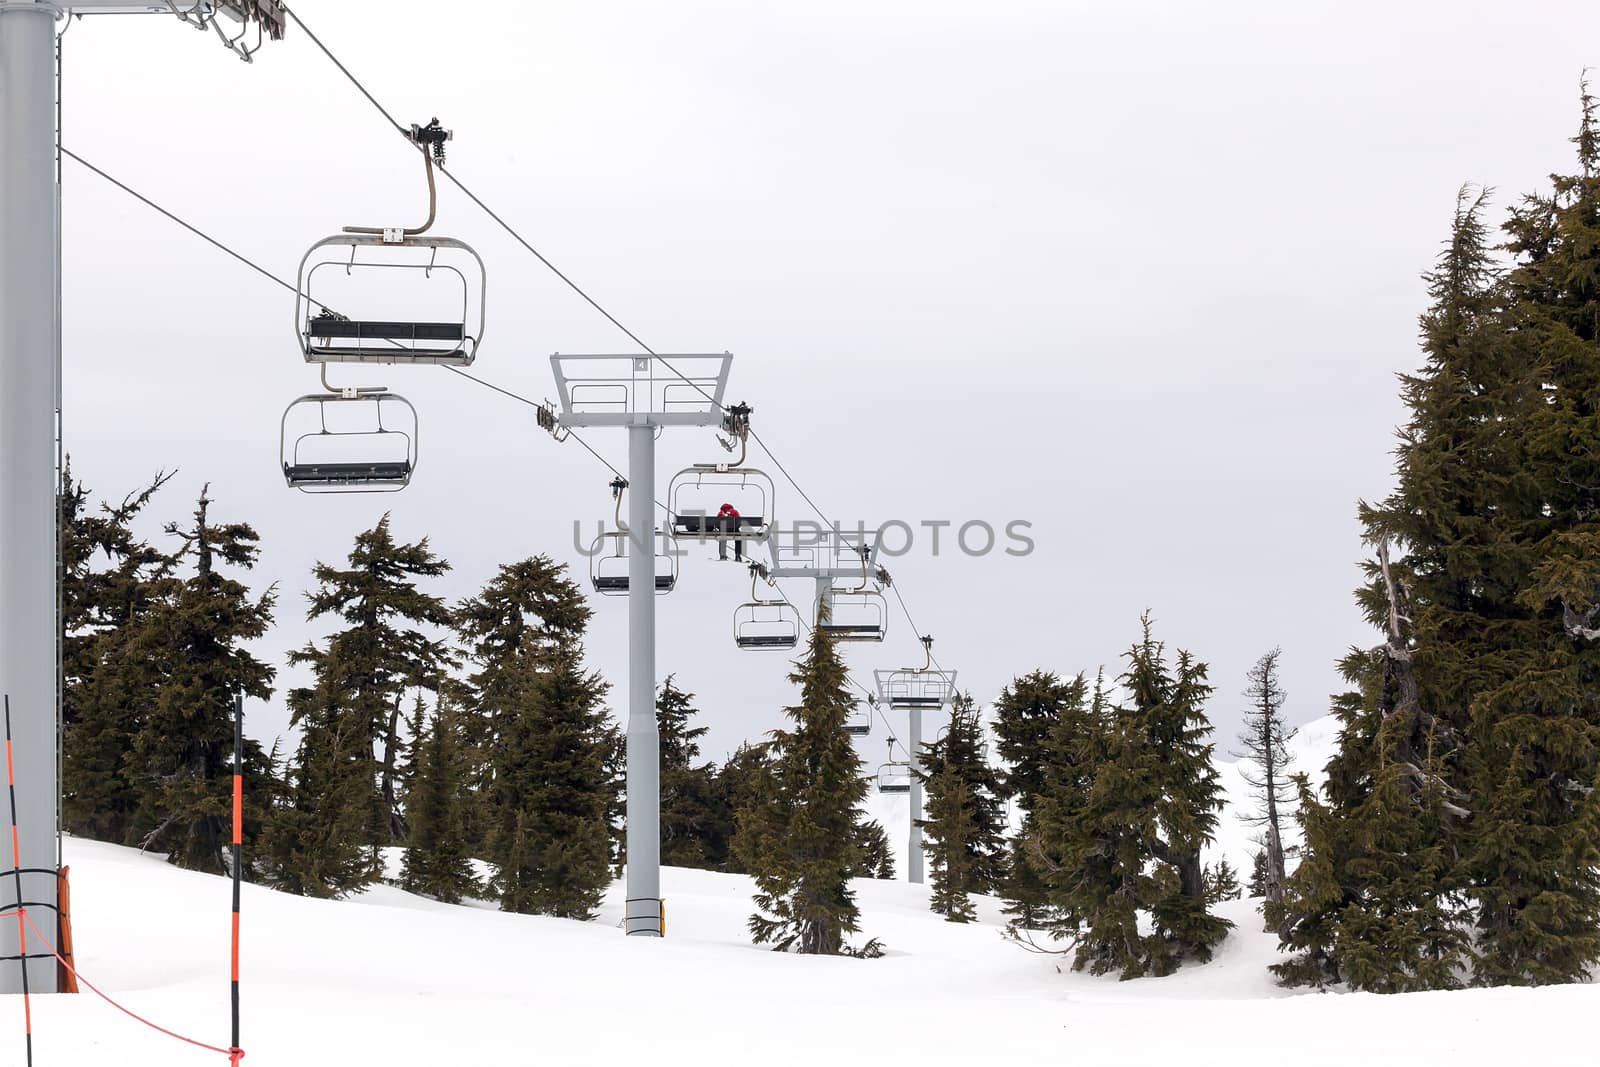 Ski Lifts at Mount Hood Ski Resort by jpldesigns